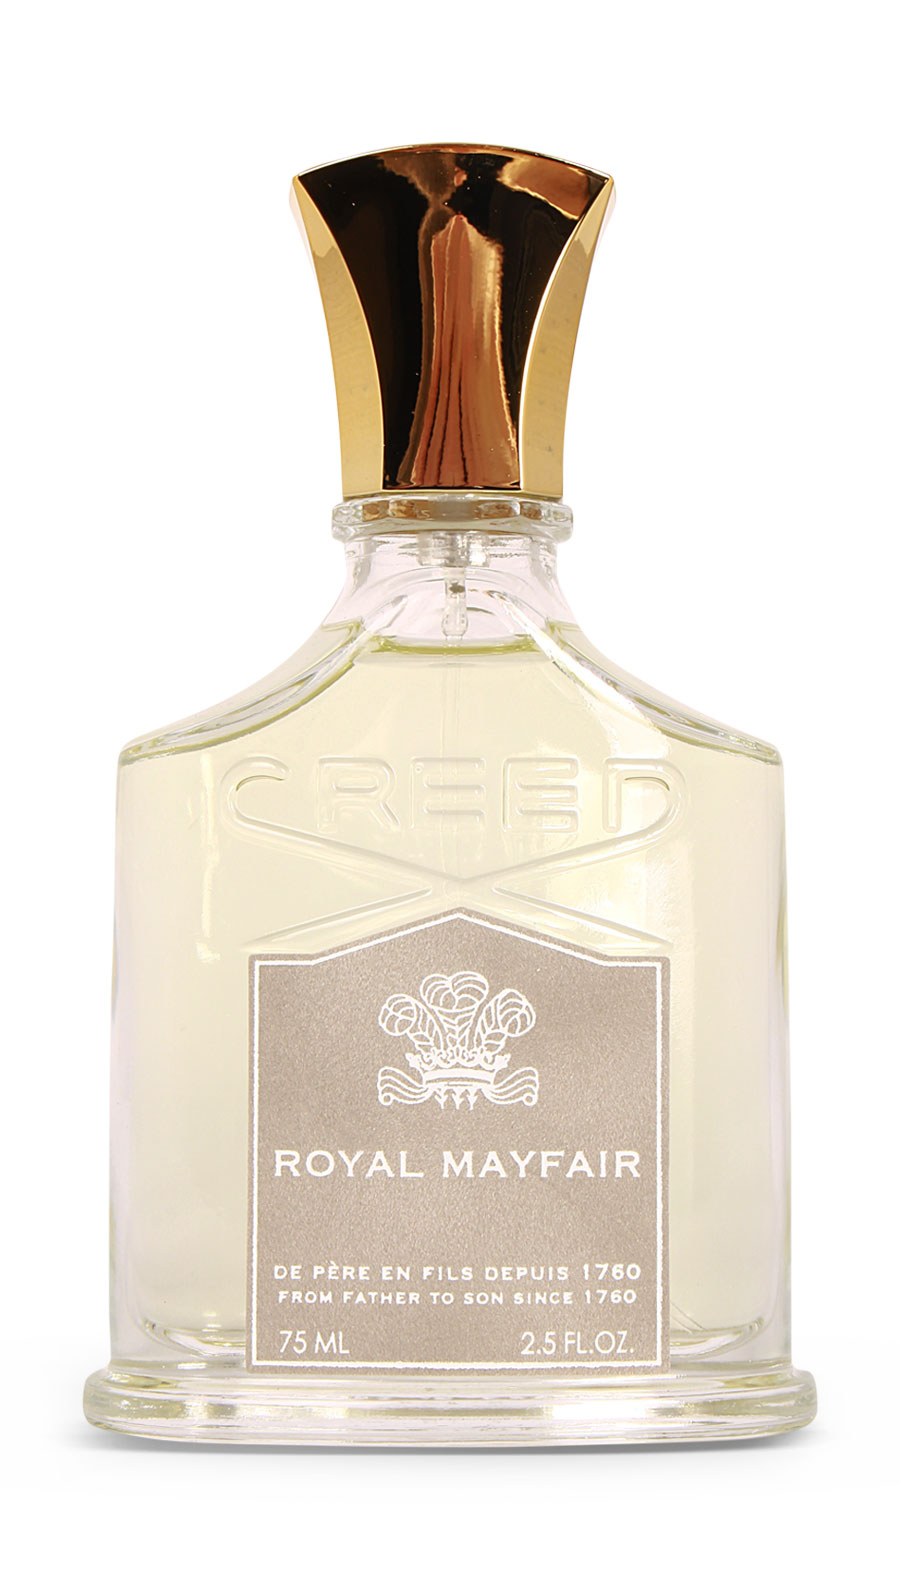 royal mayfair cologne